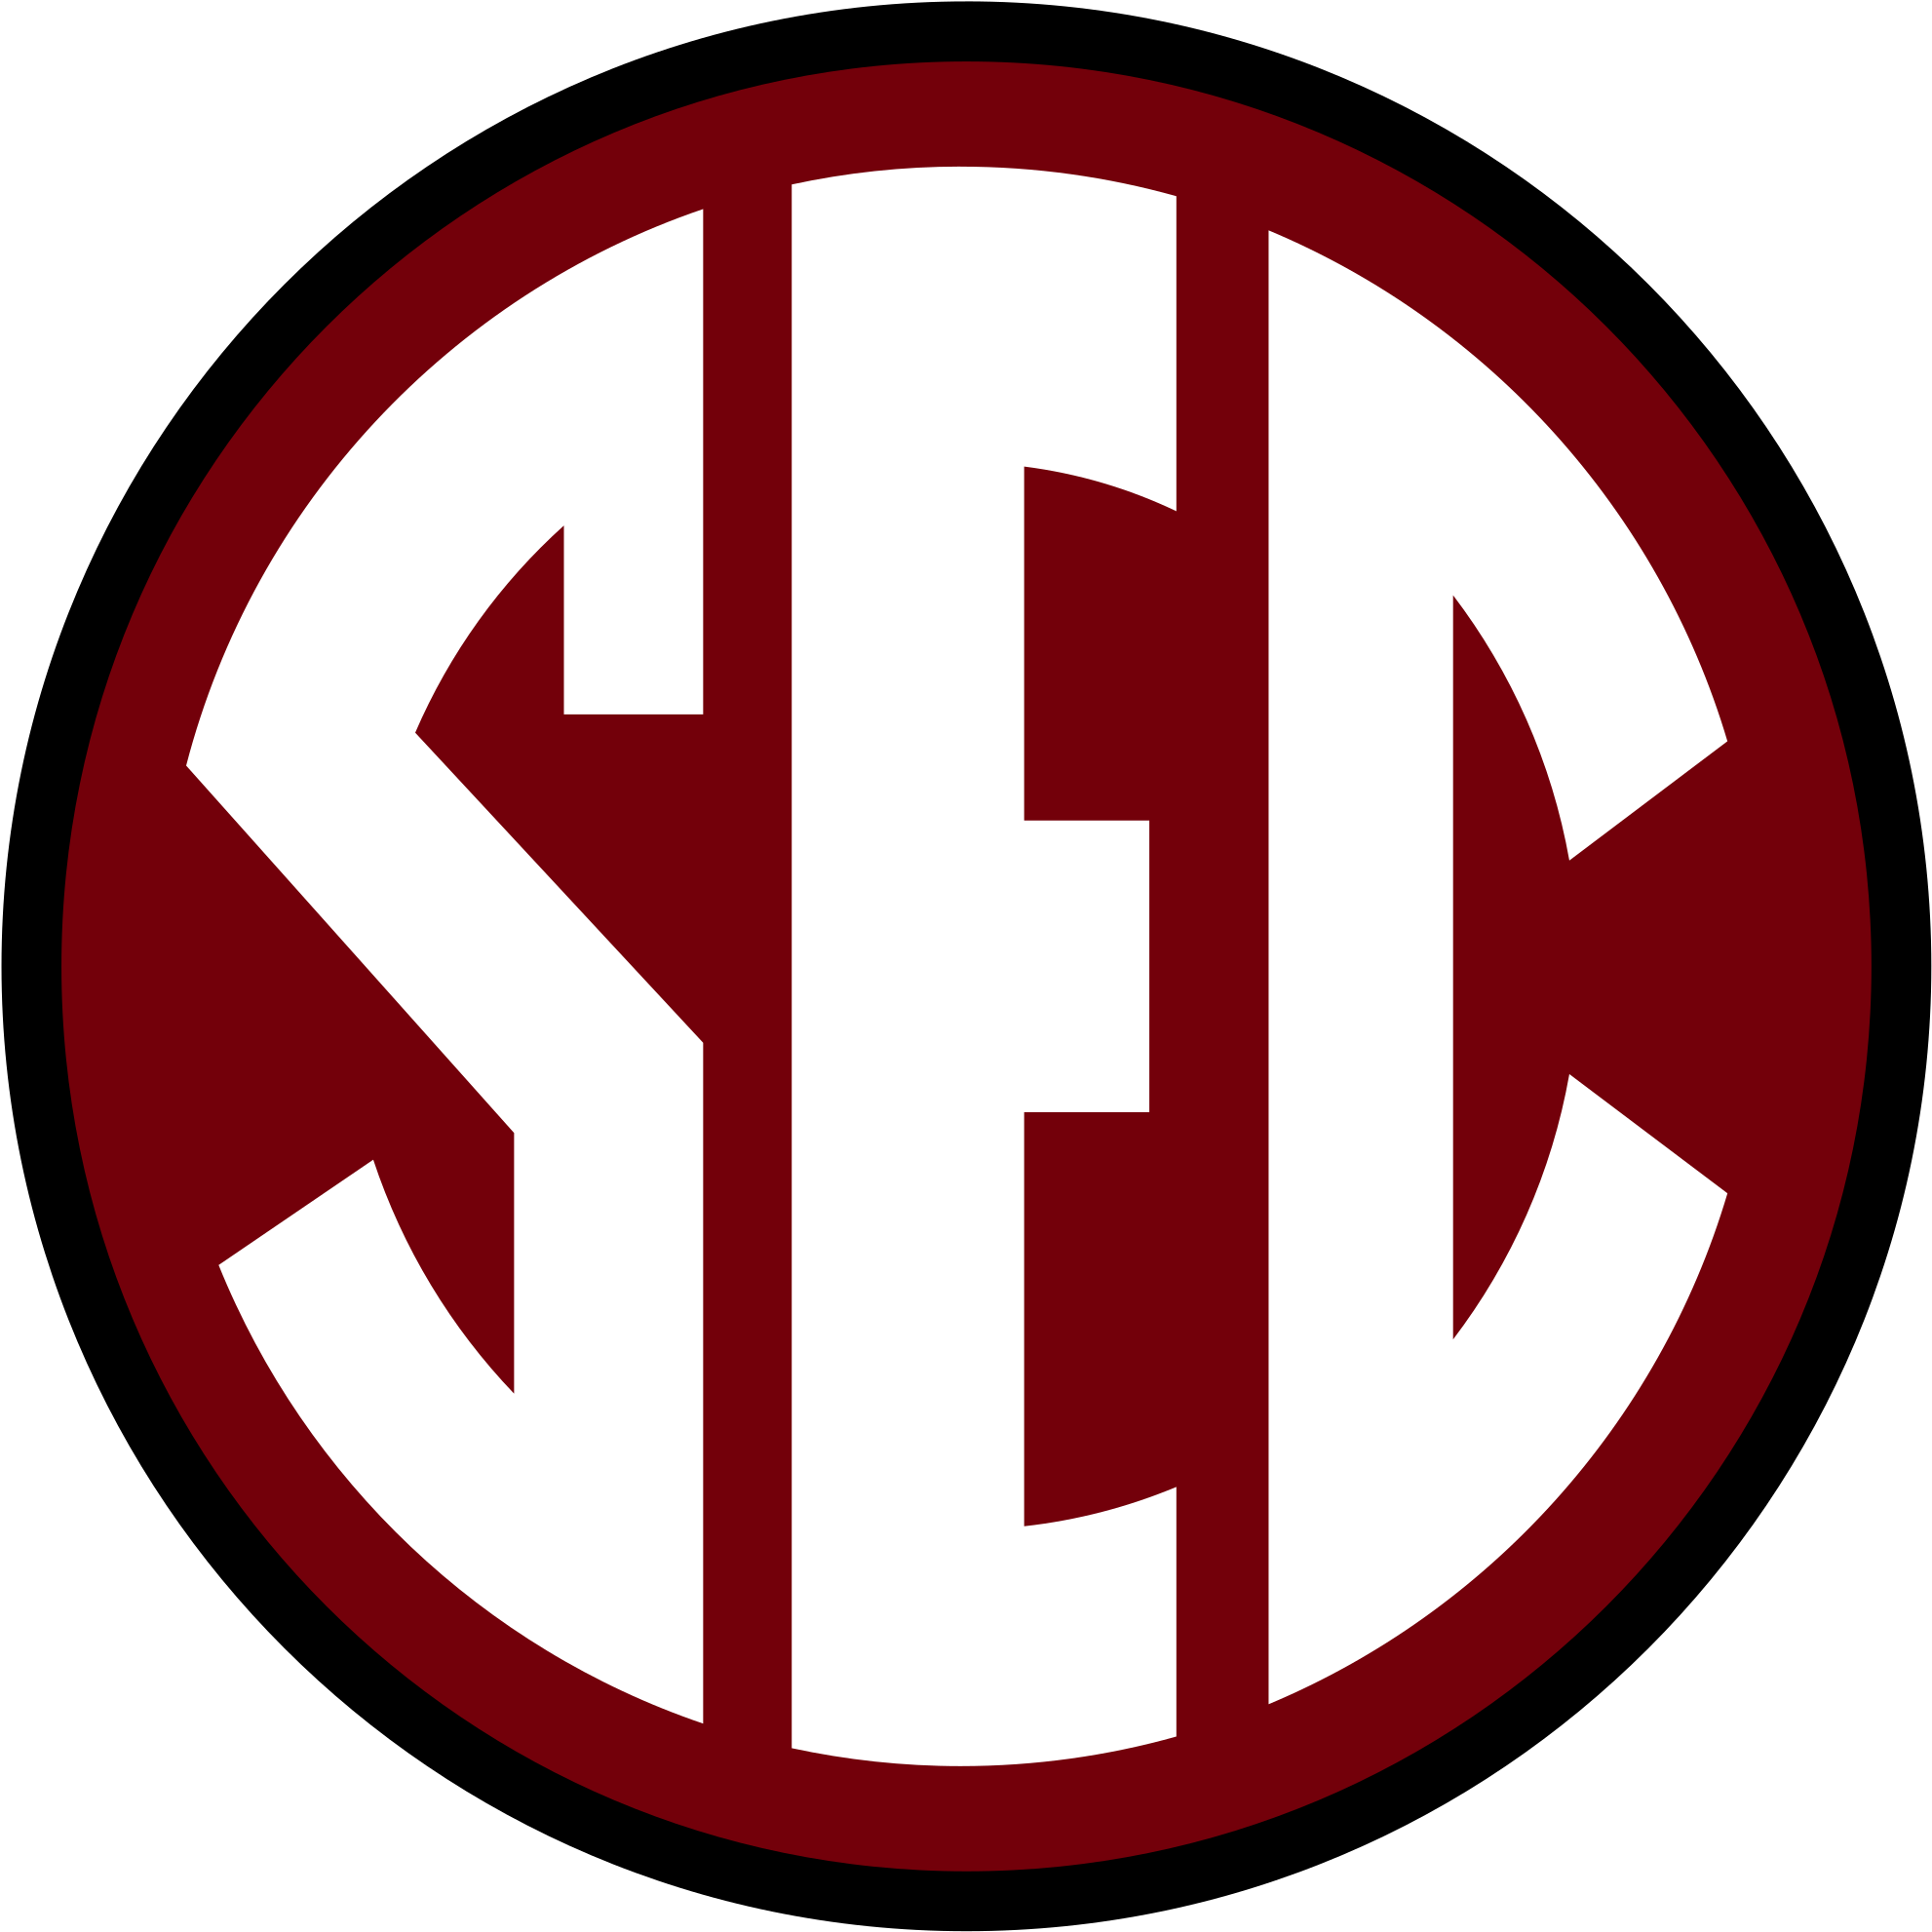 Sec Logo In South Carolina's Colors - Sec Logo Ole Miss (2000x2000)